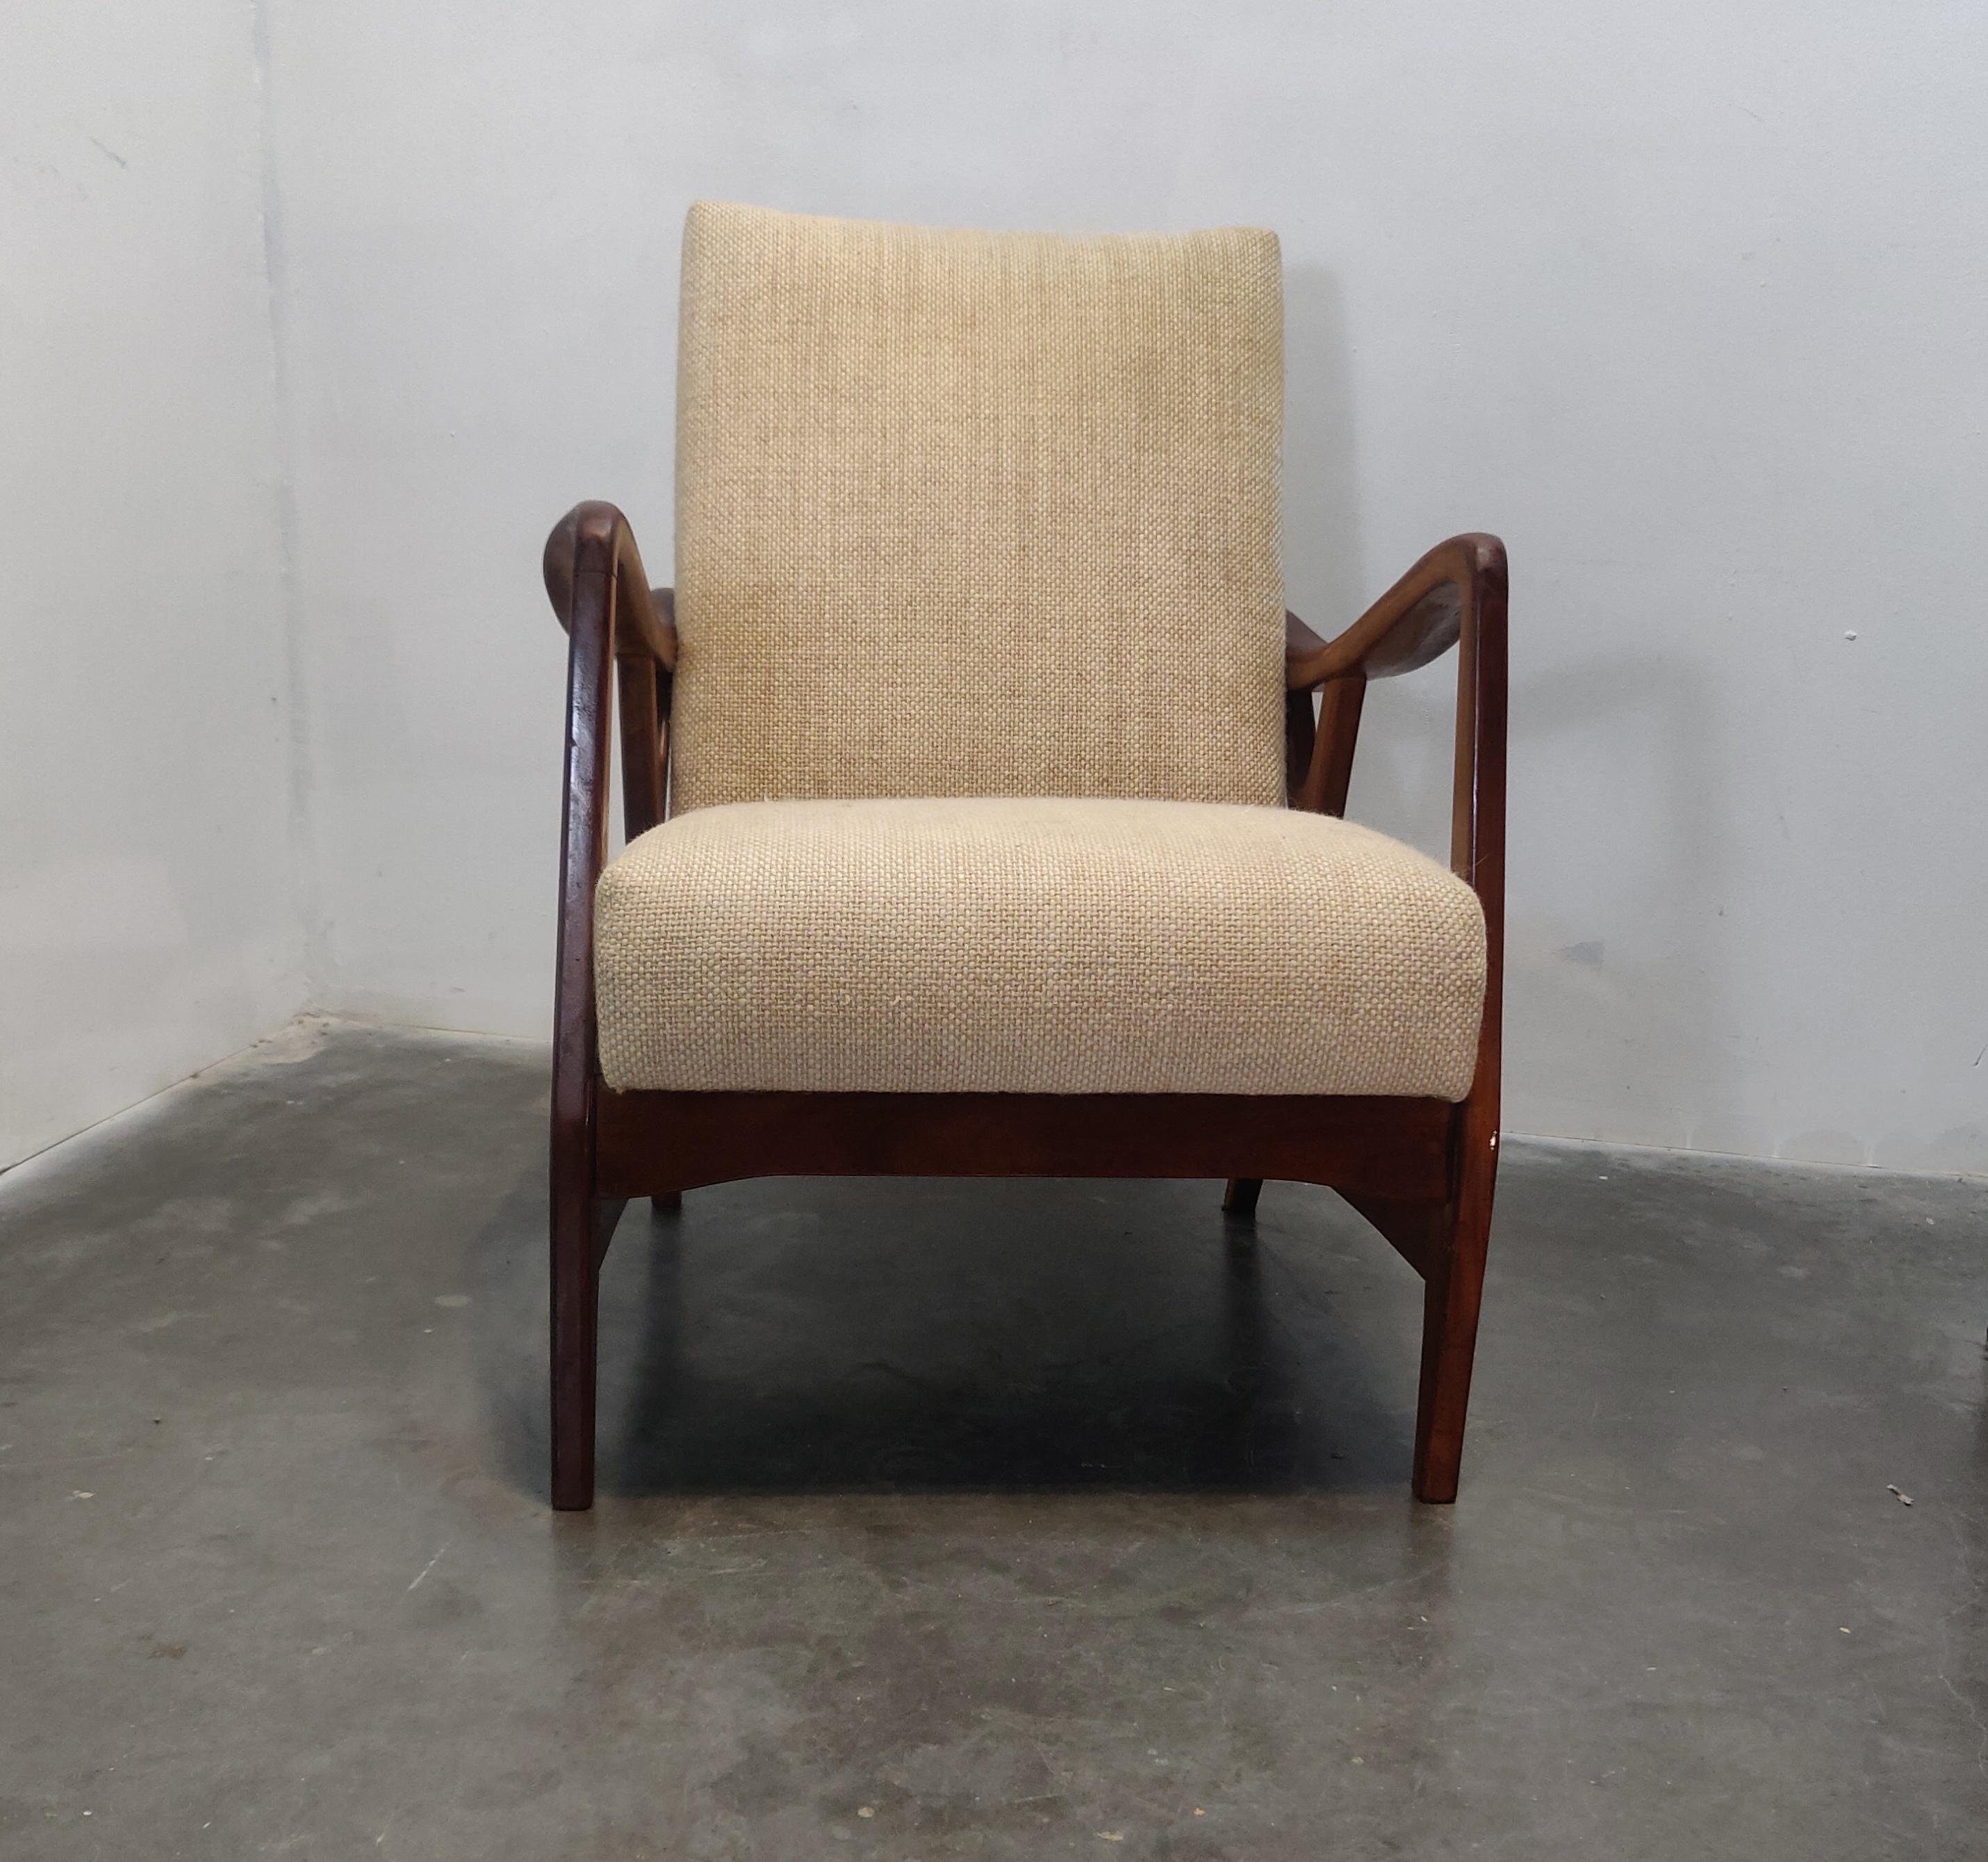 Fabric Organic Shaped Massive Teak Lounge Chair by Topform, 1950s For Sale